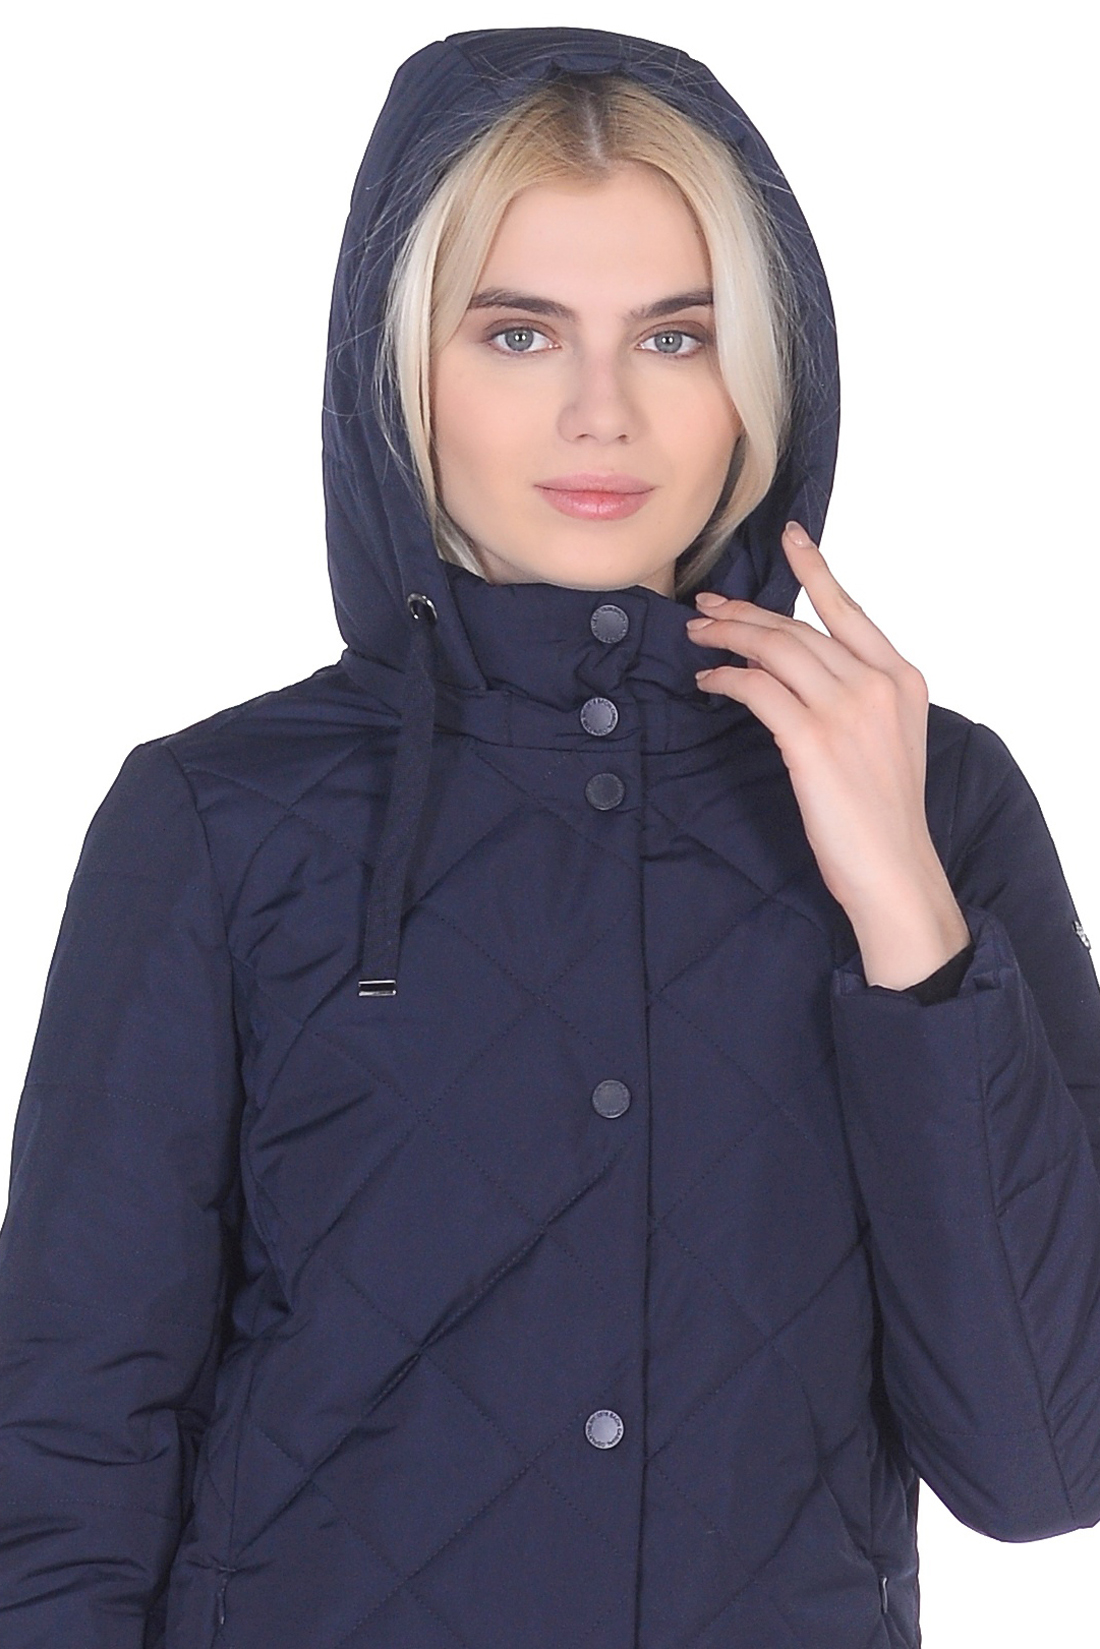 Удлинённая стёганая куртка с капюшоном (арт. baon B039022), размер L, цвет синий Удлинённая стёганая куртка с капюшоном (арт. baon B039022) - фото 3